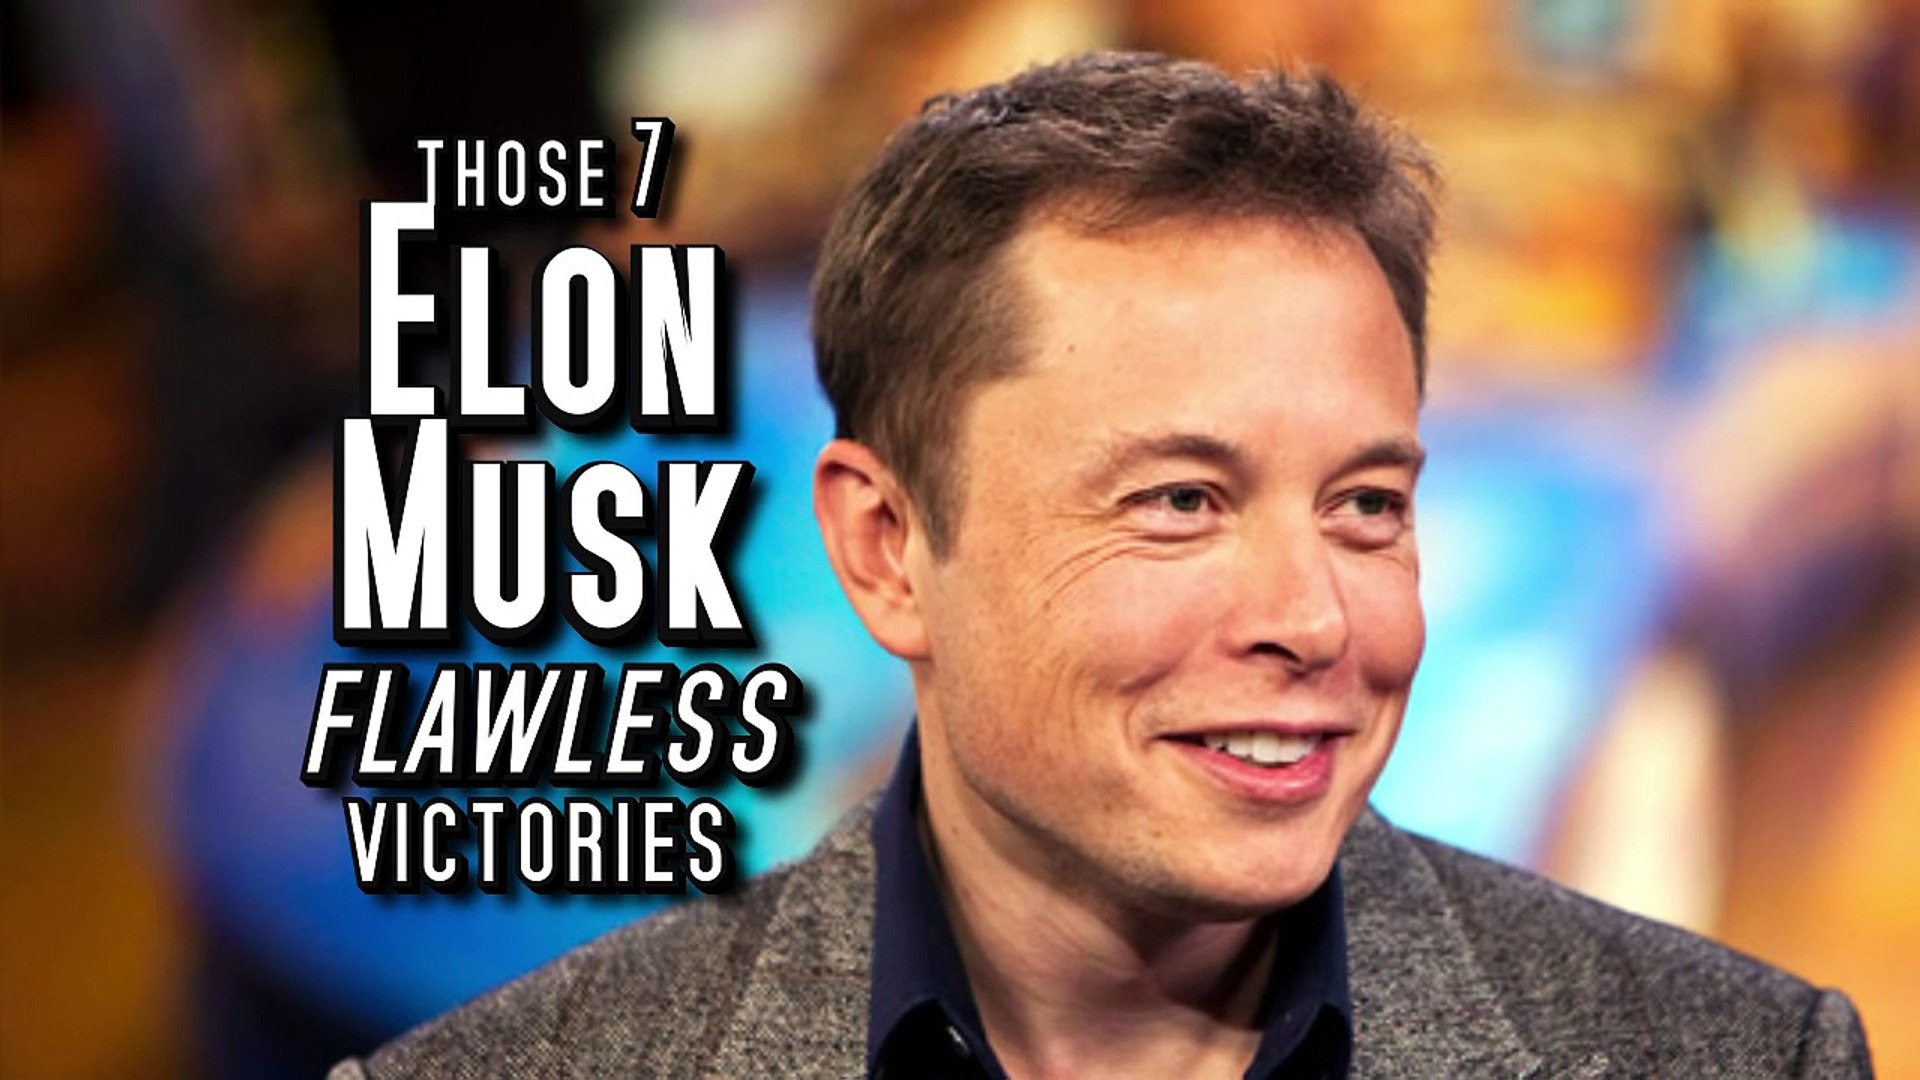 Those 7 Elon Musk Flawless Victories